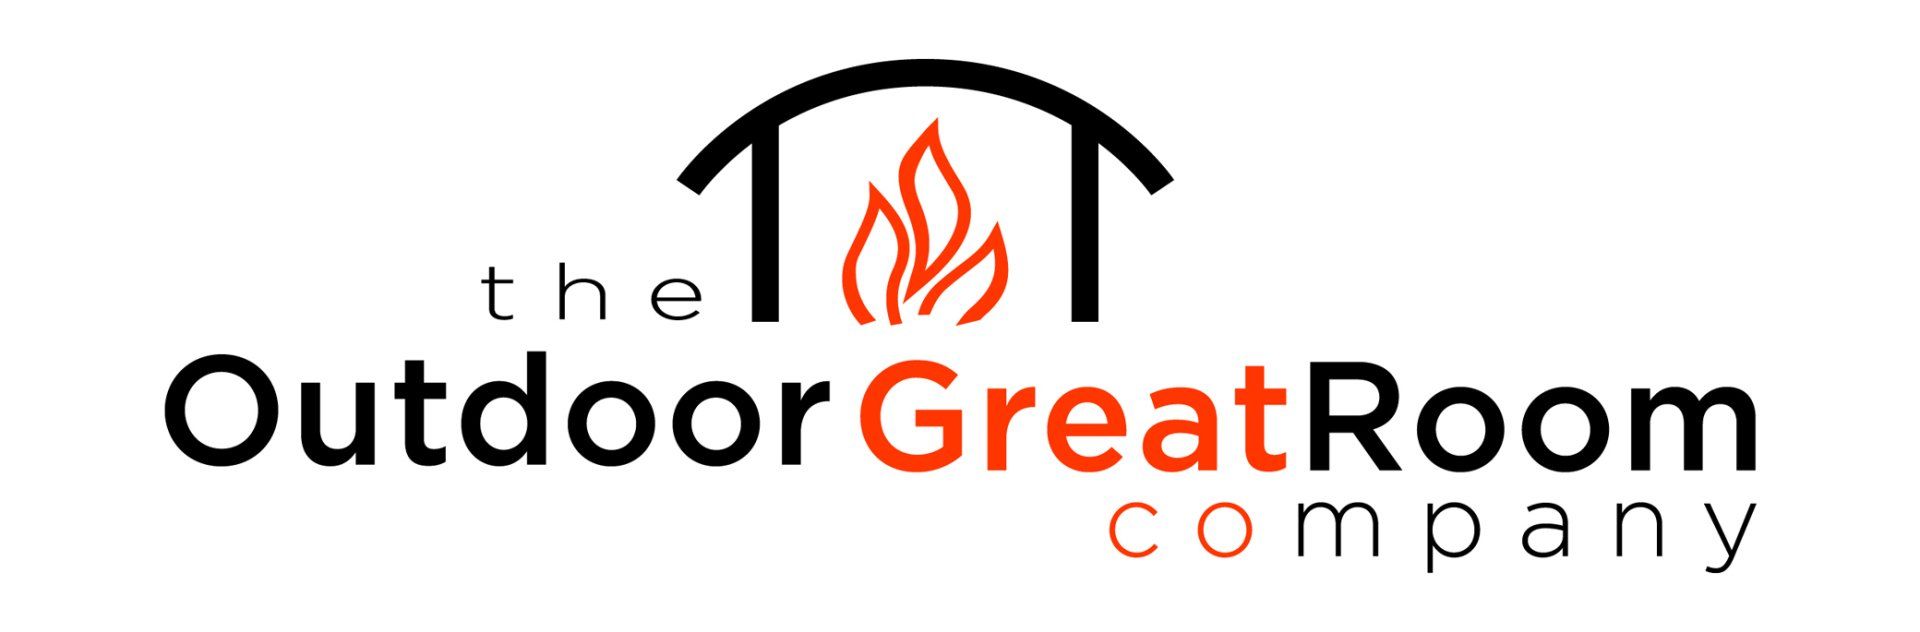 The Outdoor Great Room Company logo